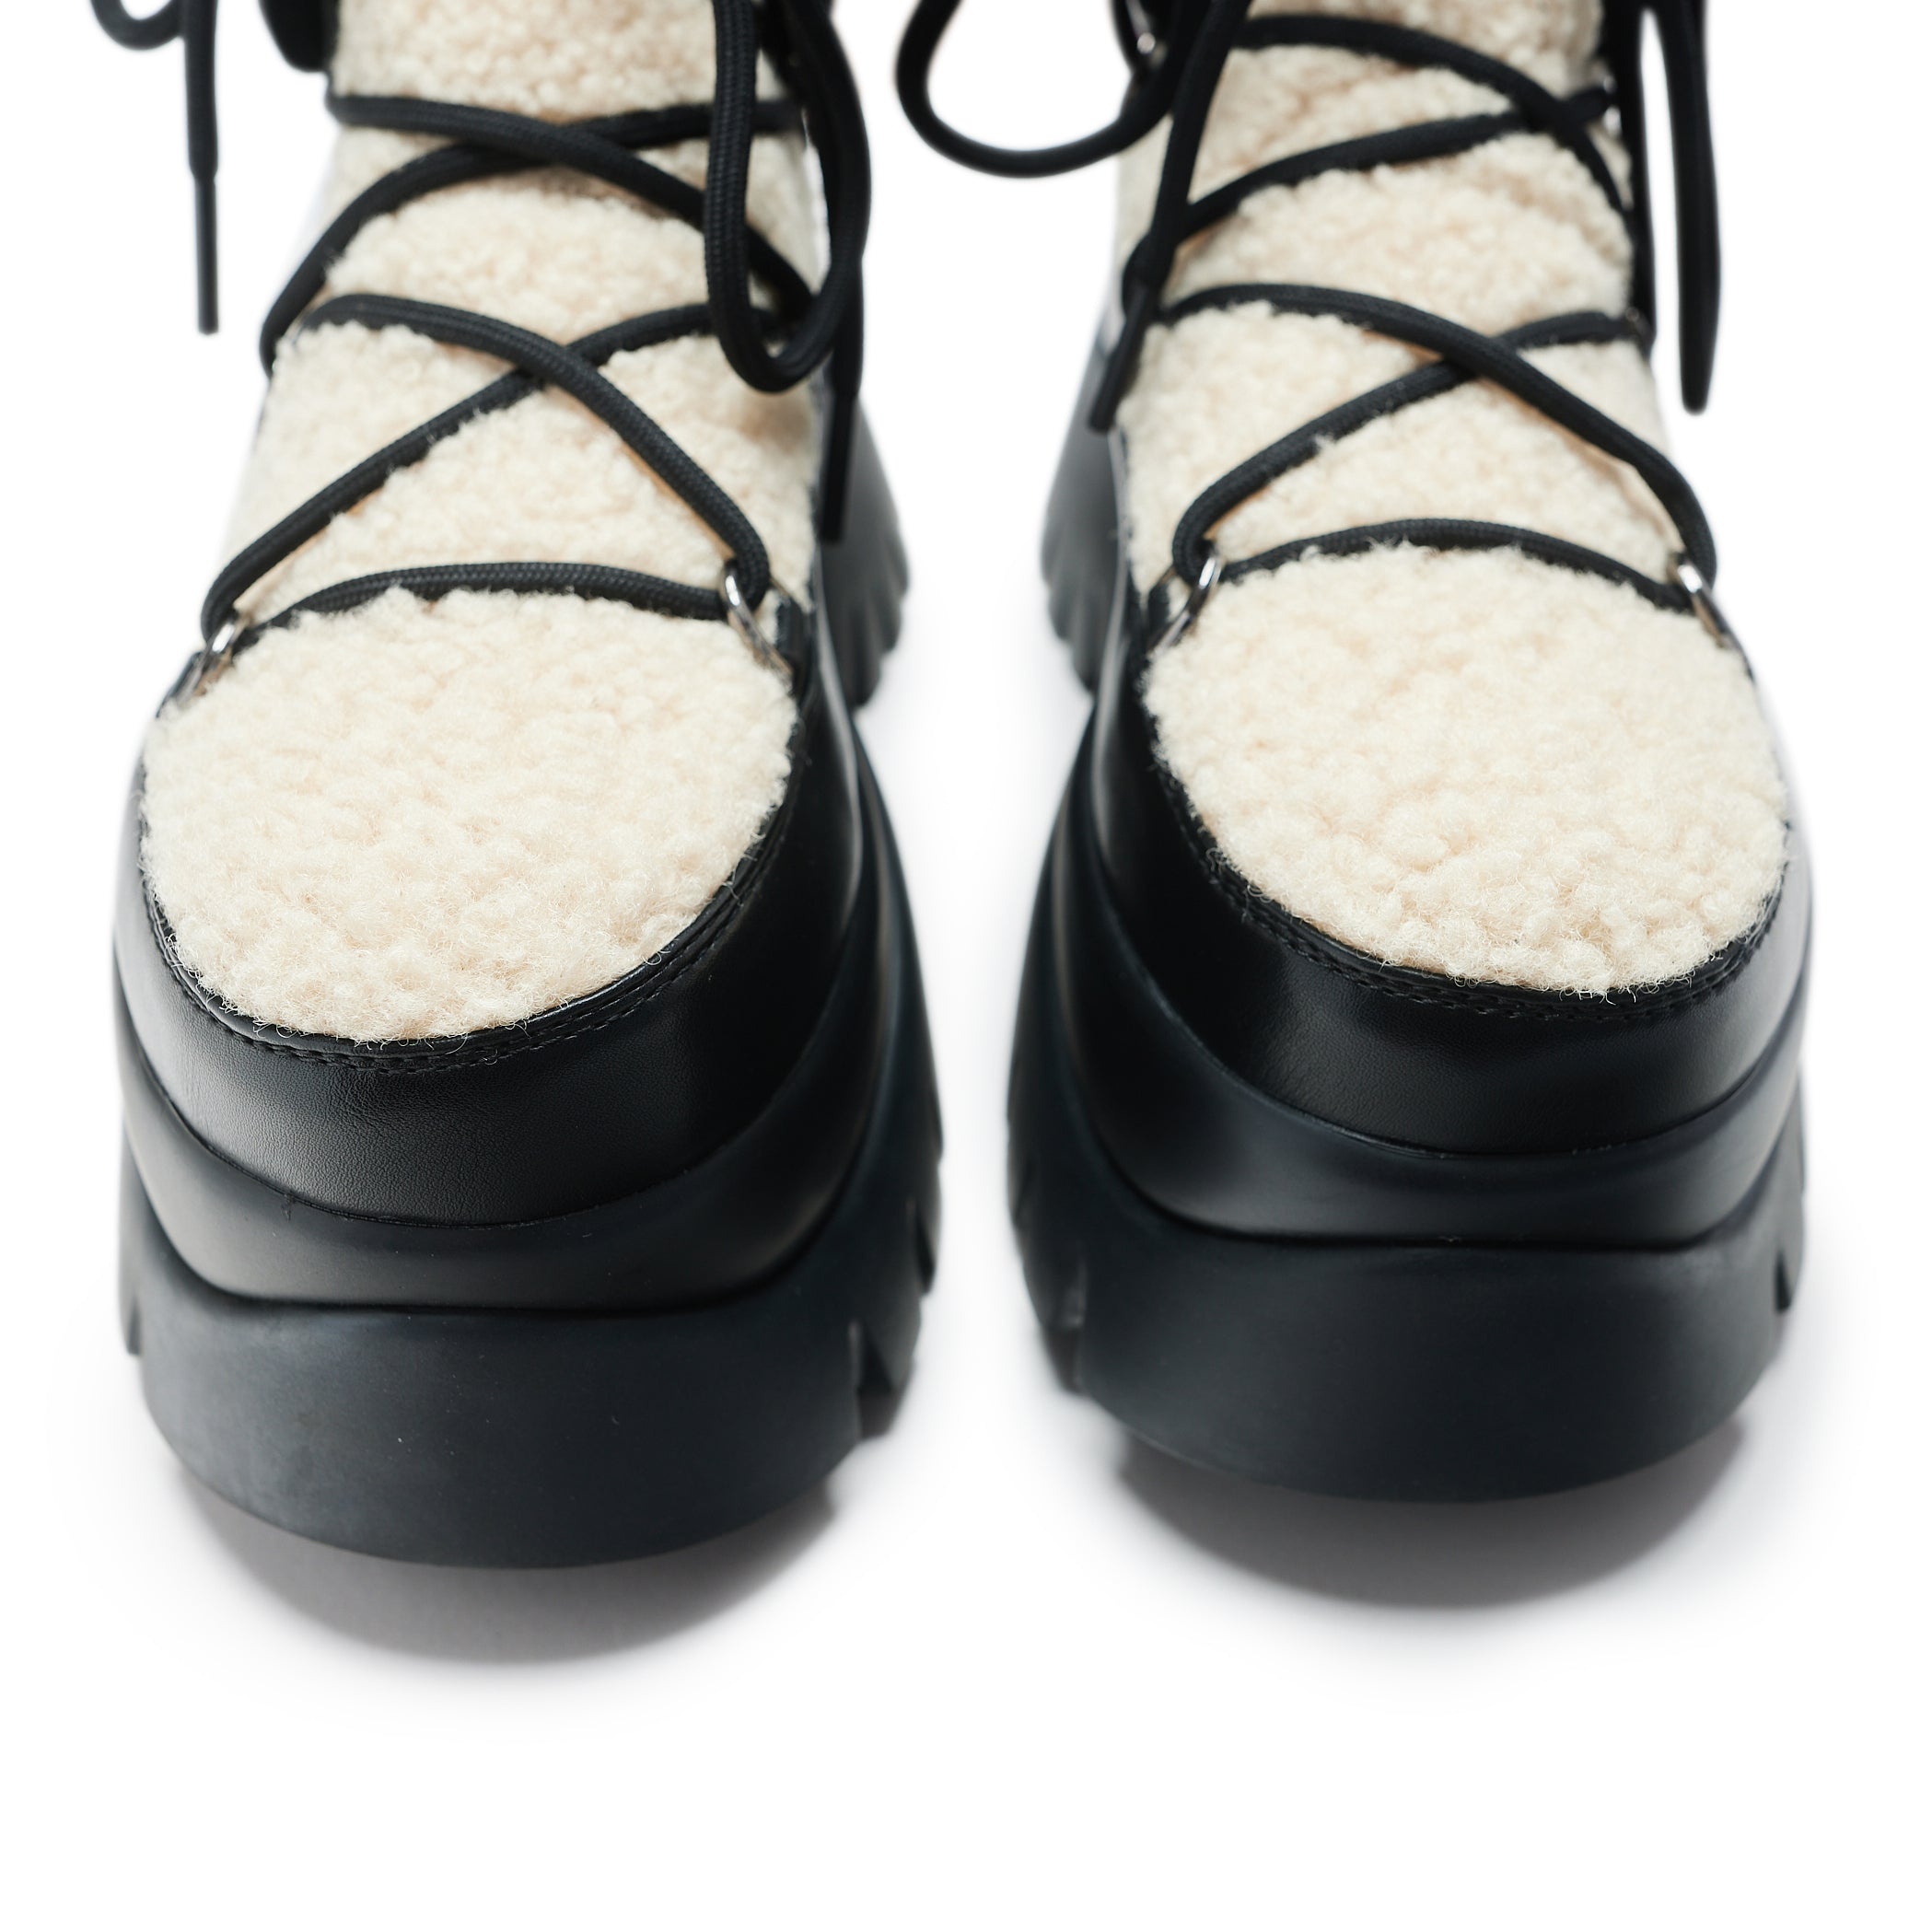 Cream Fluffy Vilun Winter Boots | Snow & Winter Boots | KOI